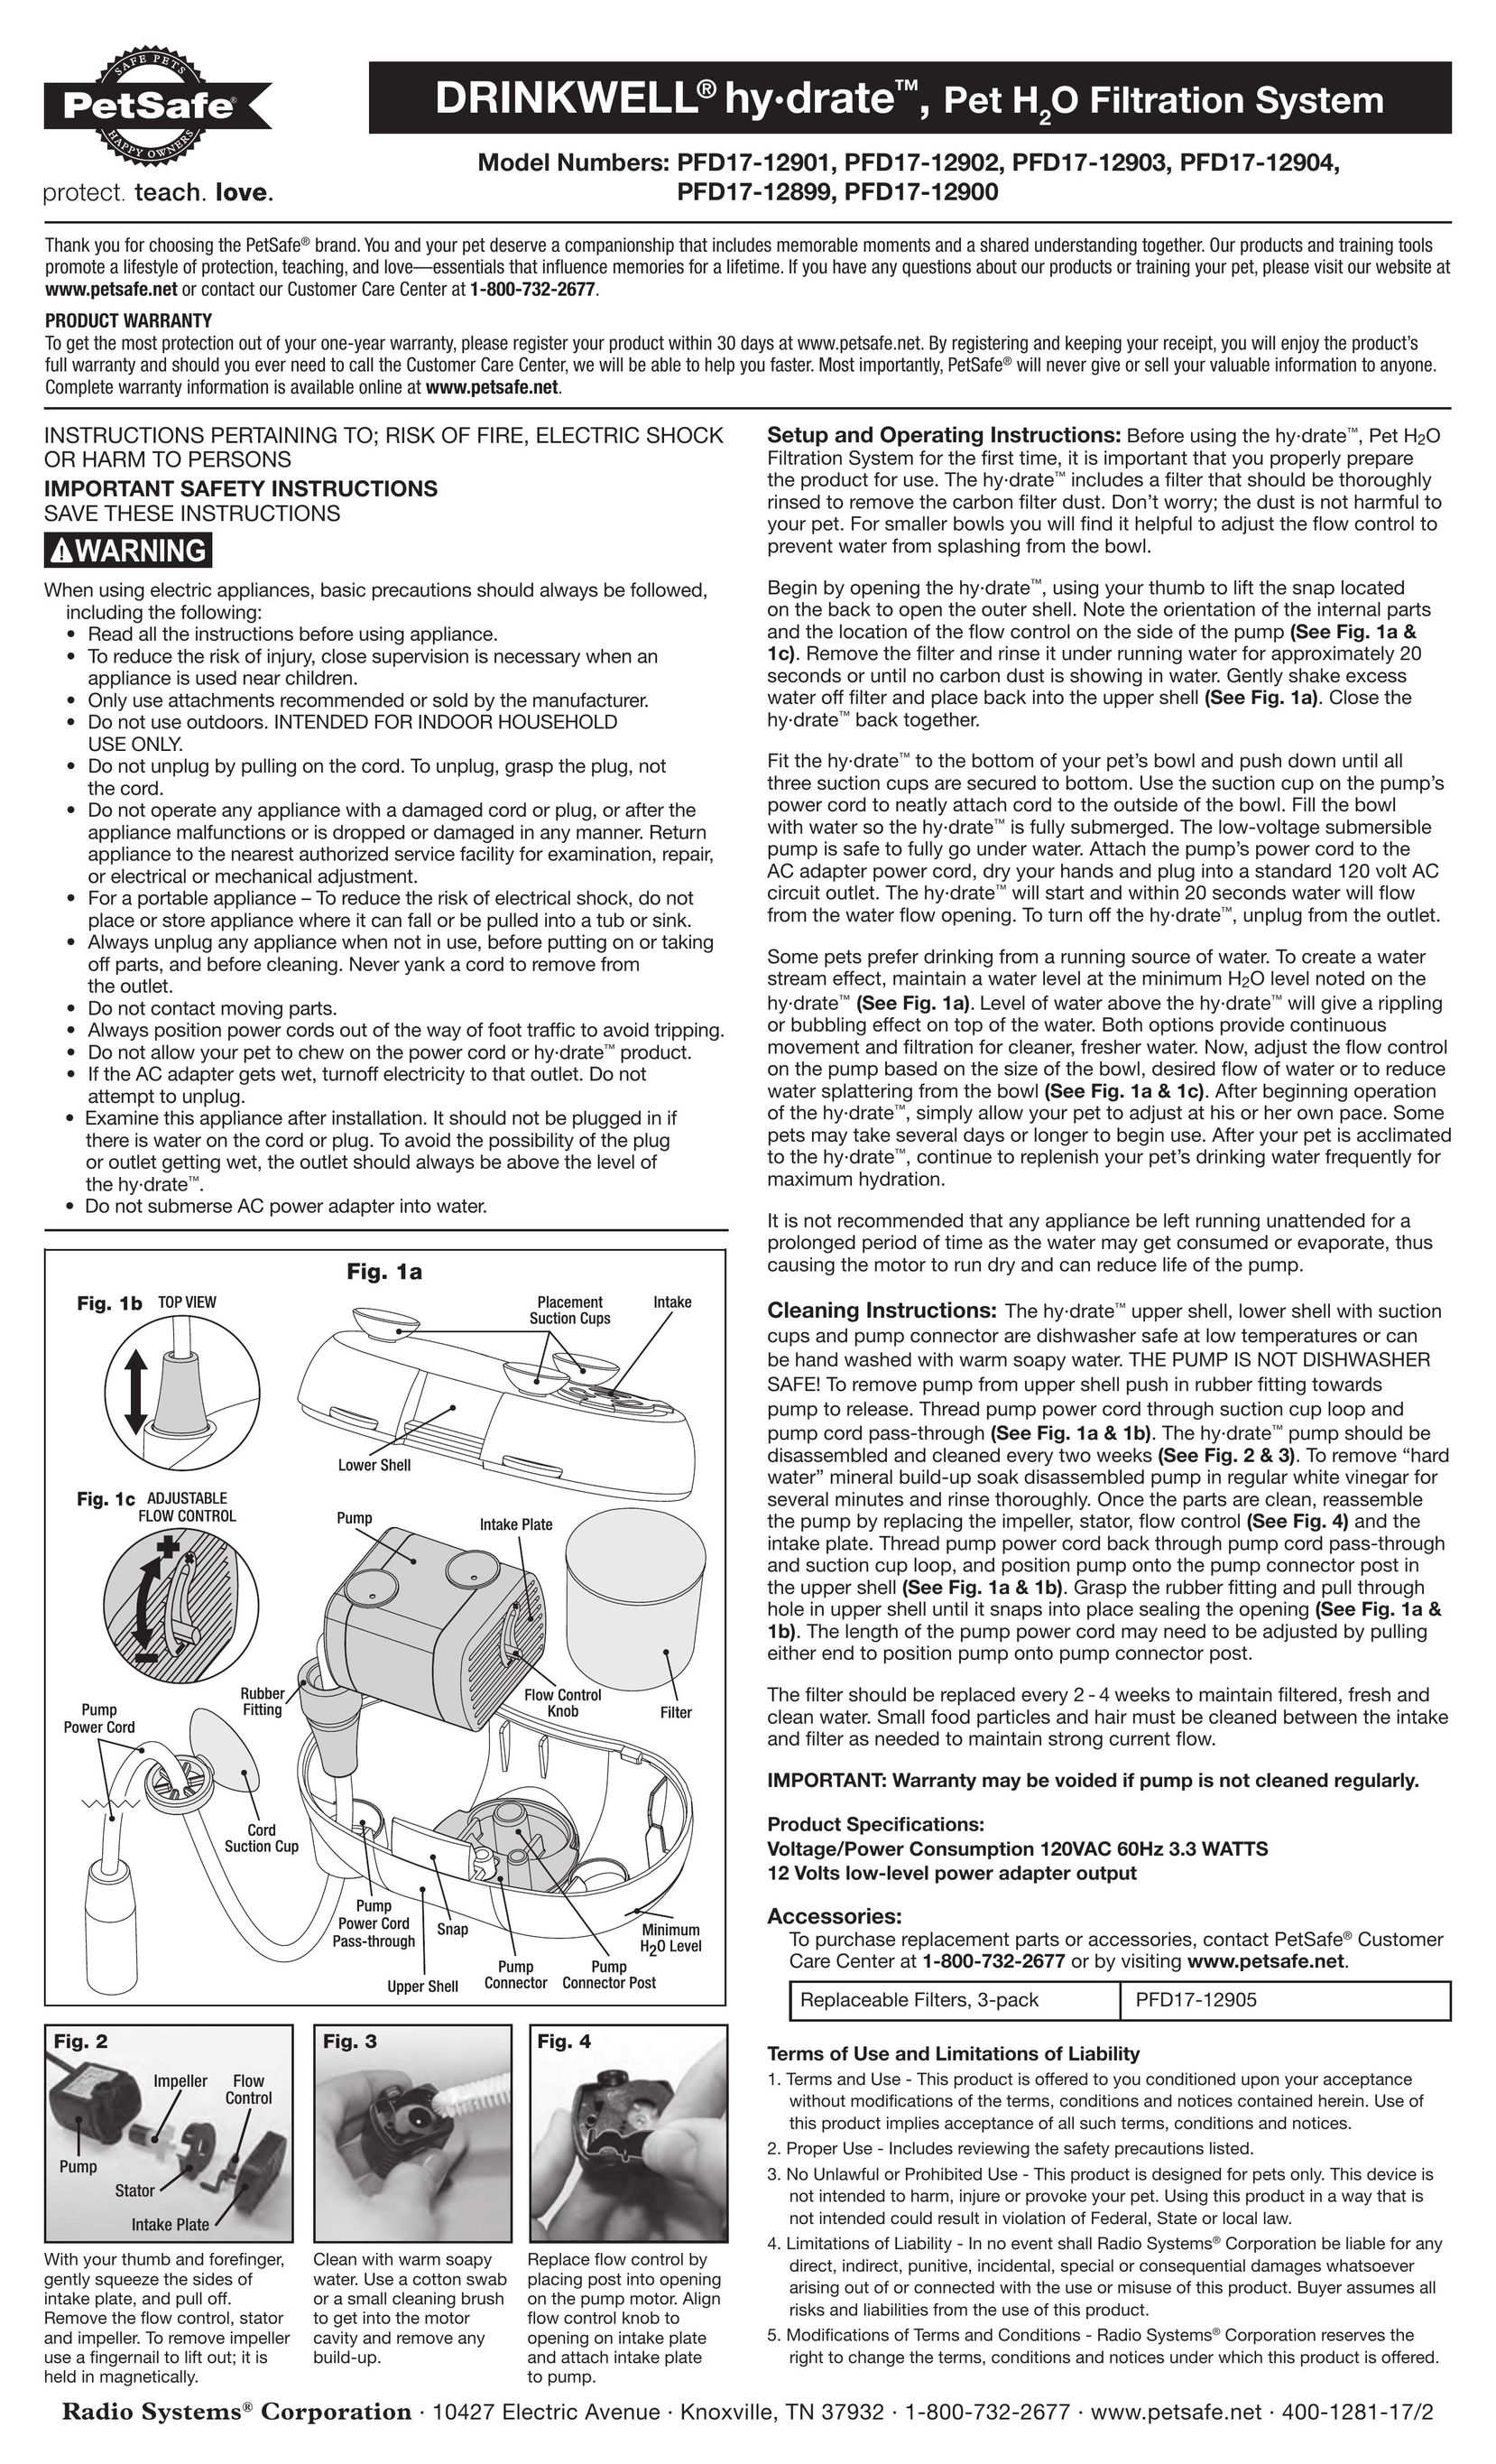 Petsafe PFD17-12902 Water System User Manual